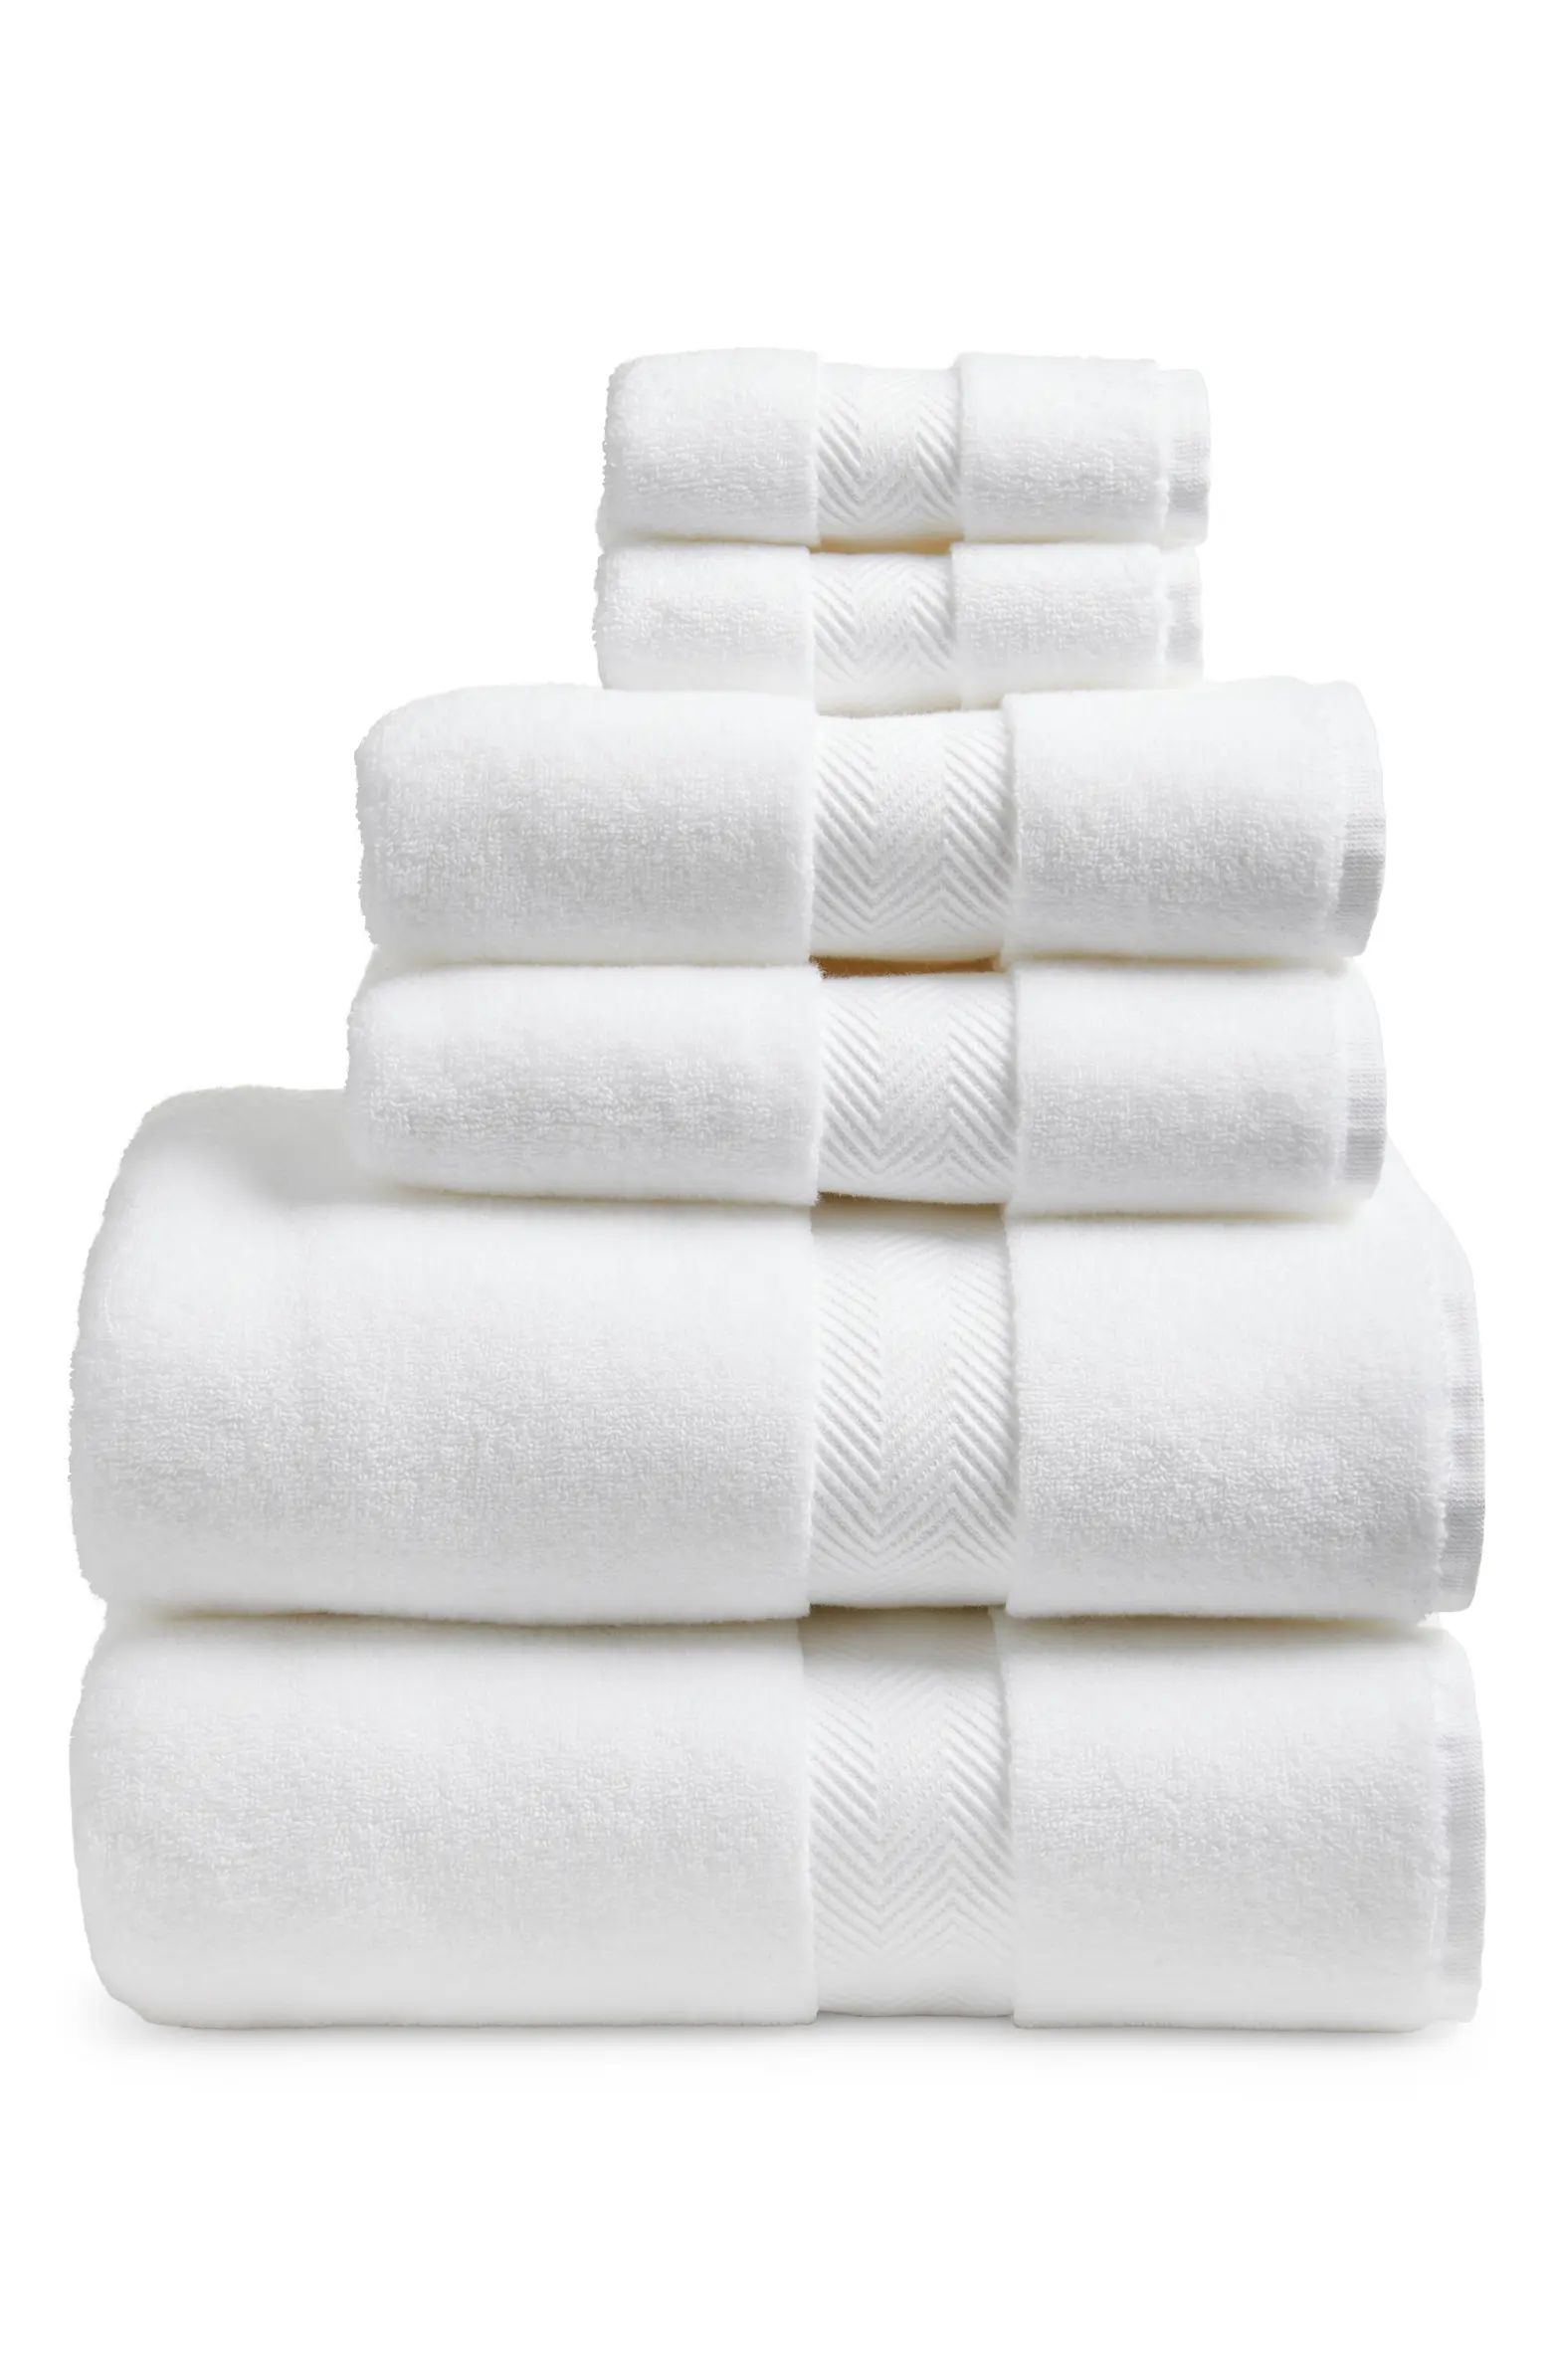 Organic Hydrocotton 6-Piece Towel Set $144 Value | Nordstrom